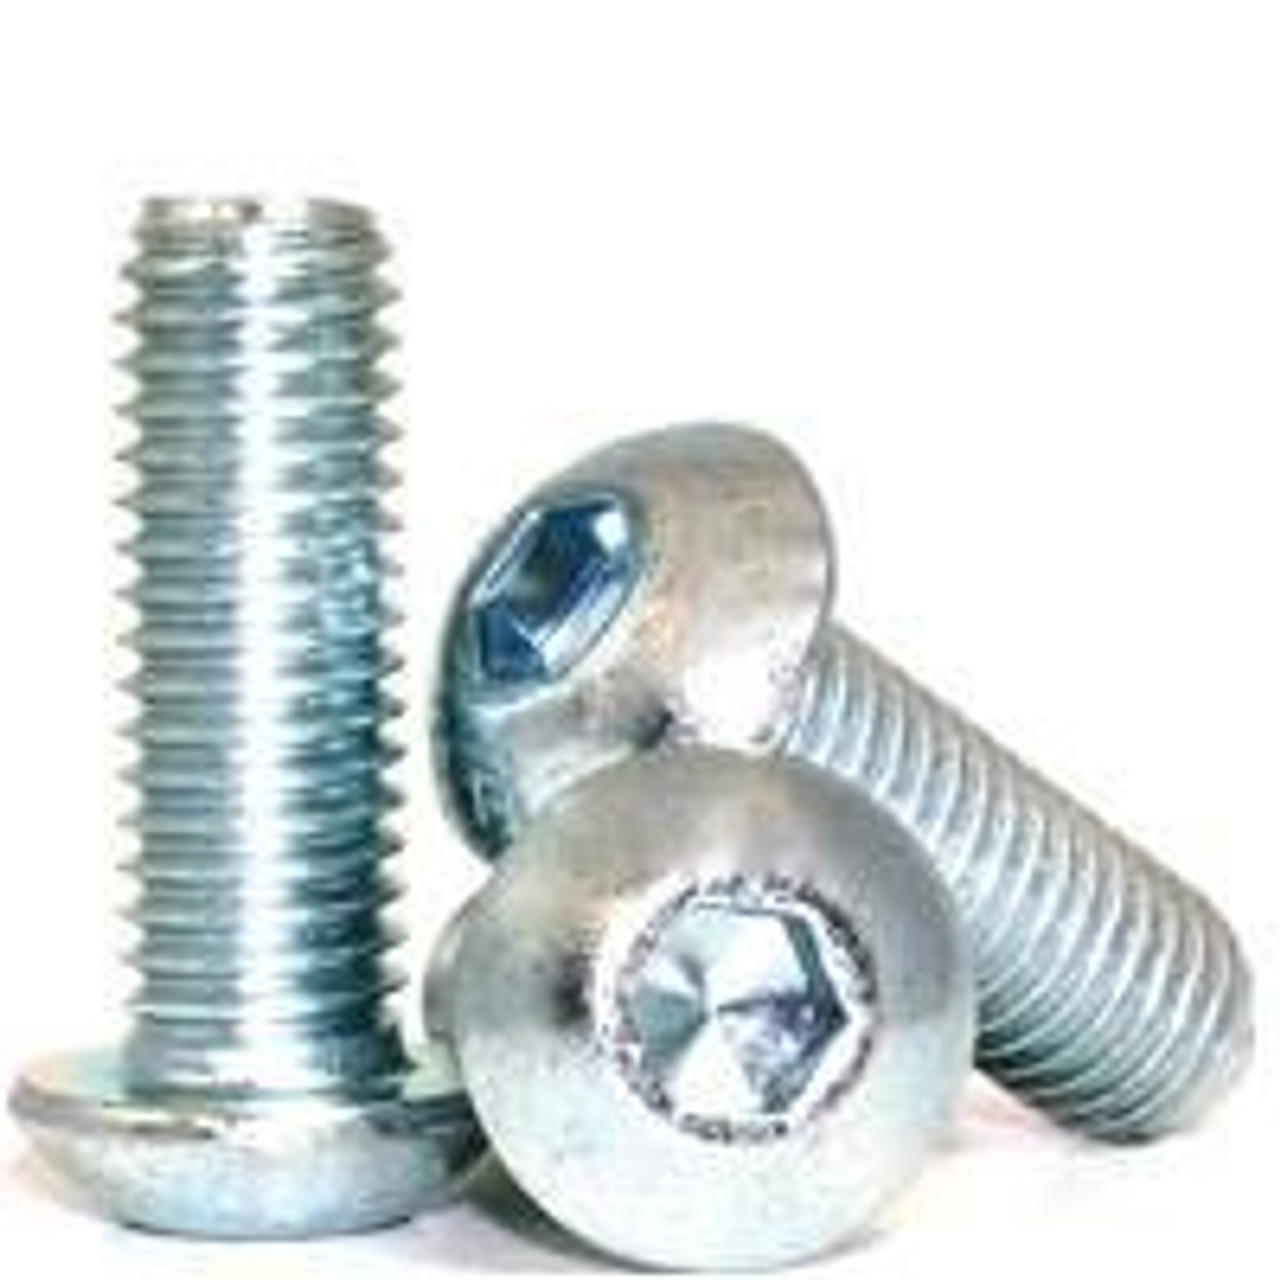 12.9 Alloy Steel ISO 7380 M6-1.0 x 20mm Button Head Socket Caps Screws 10 